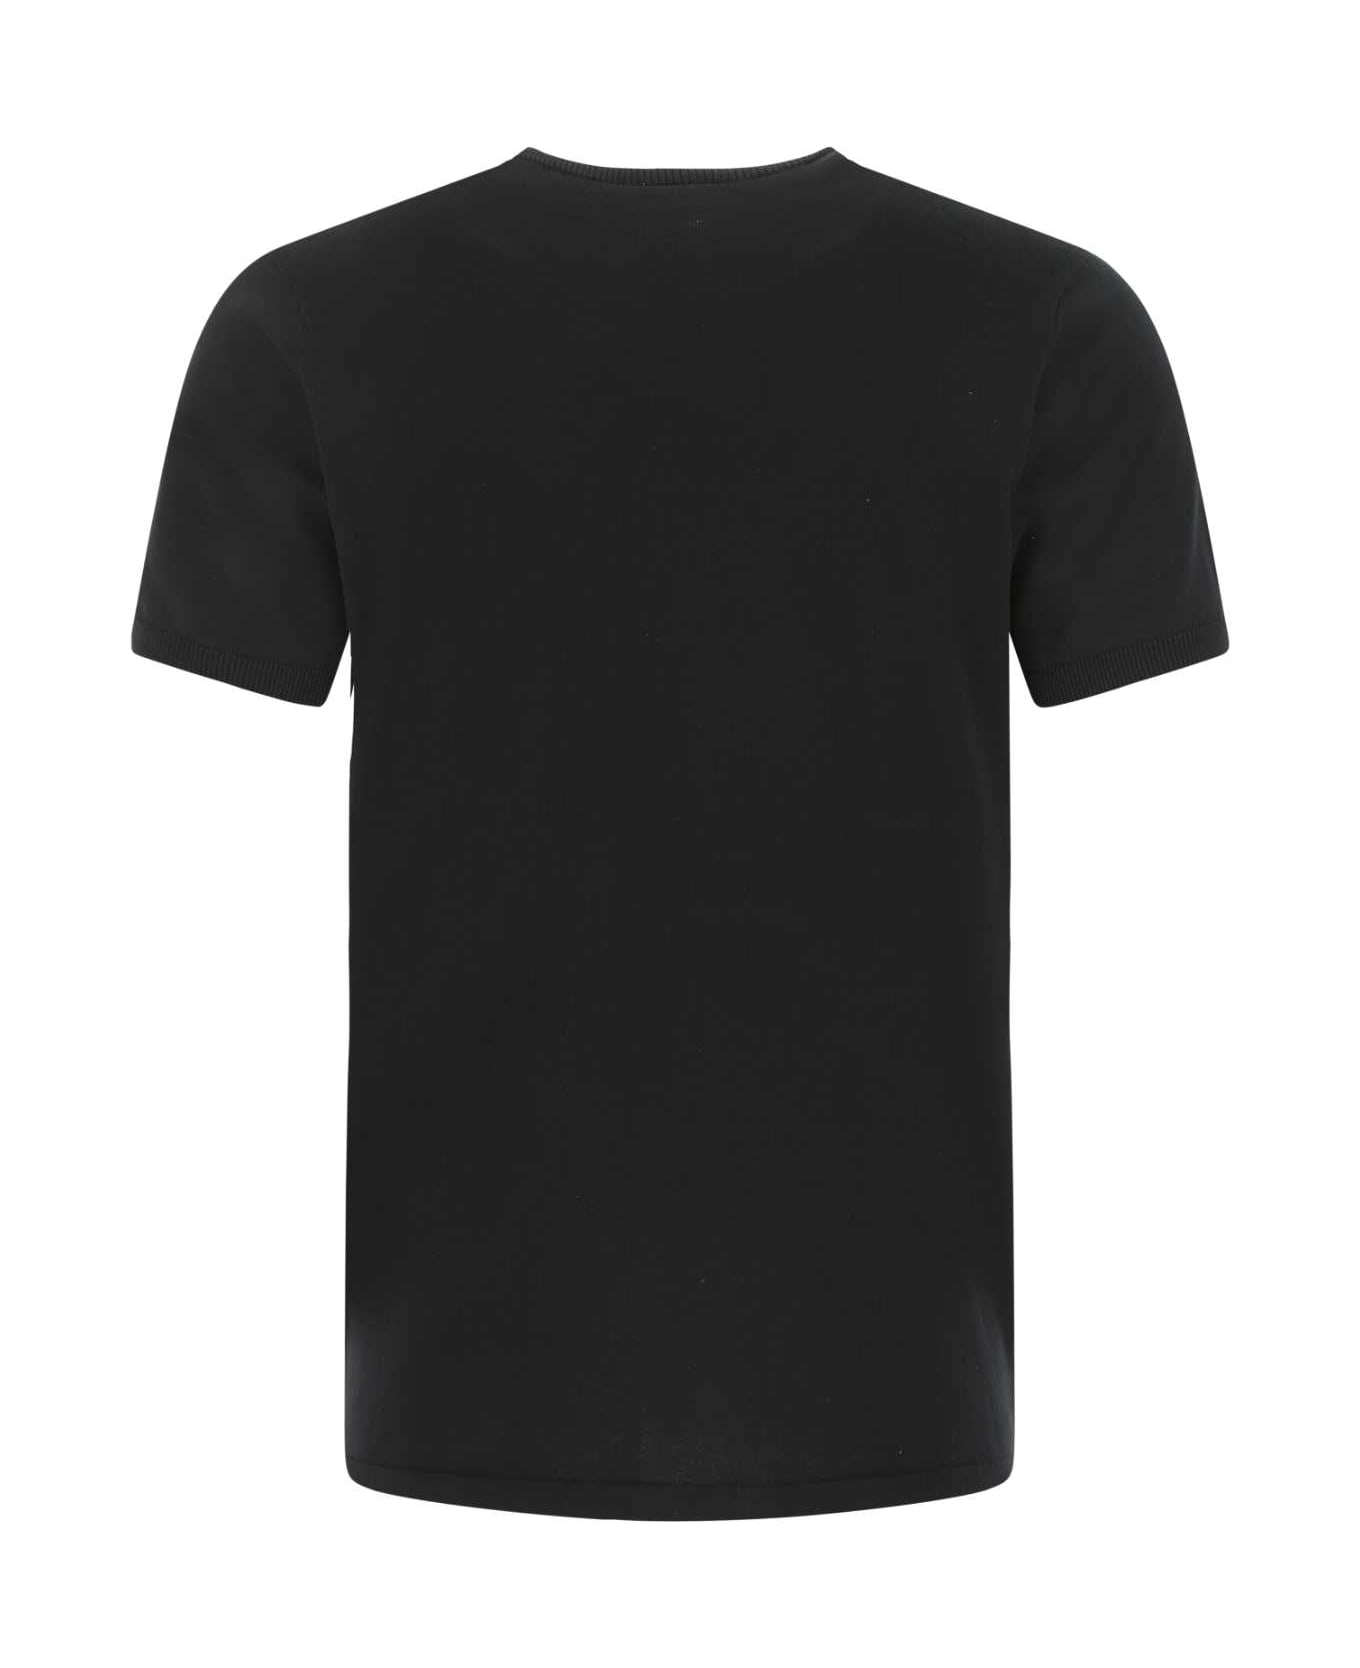 Aspesi Black Cotton T-shirt - 01241 シャツ